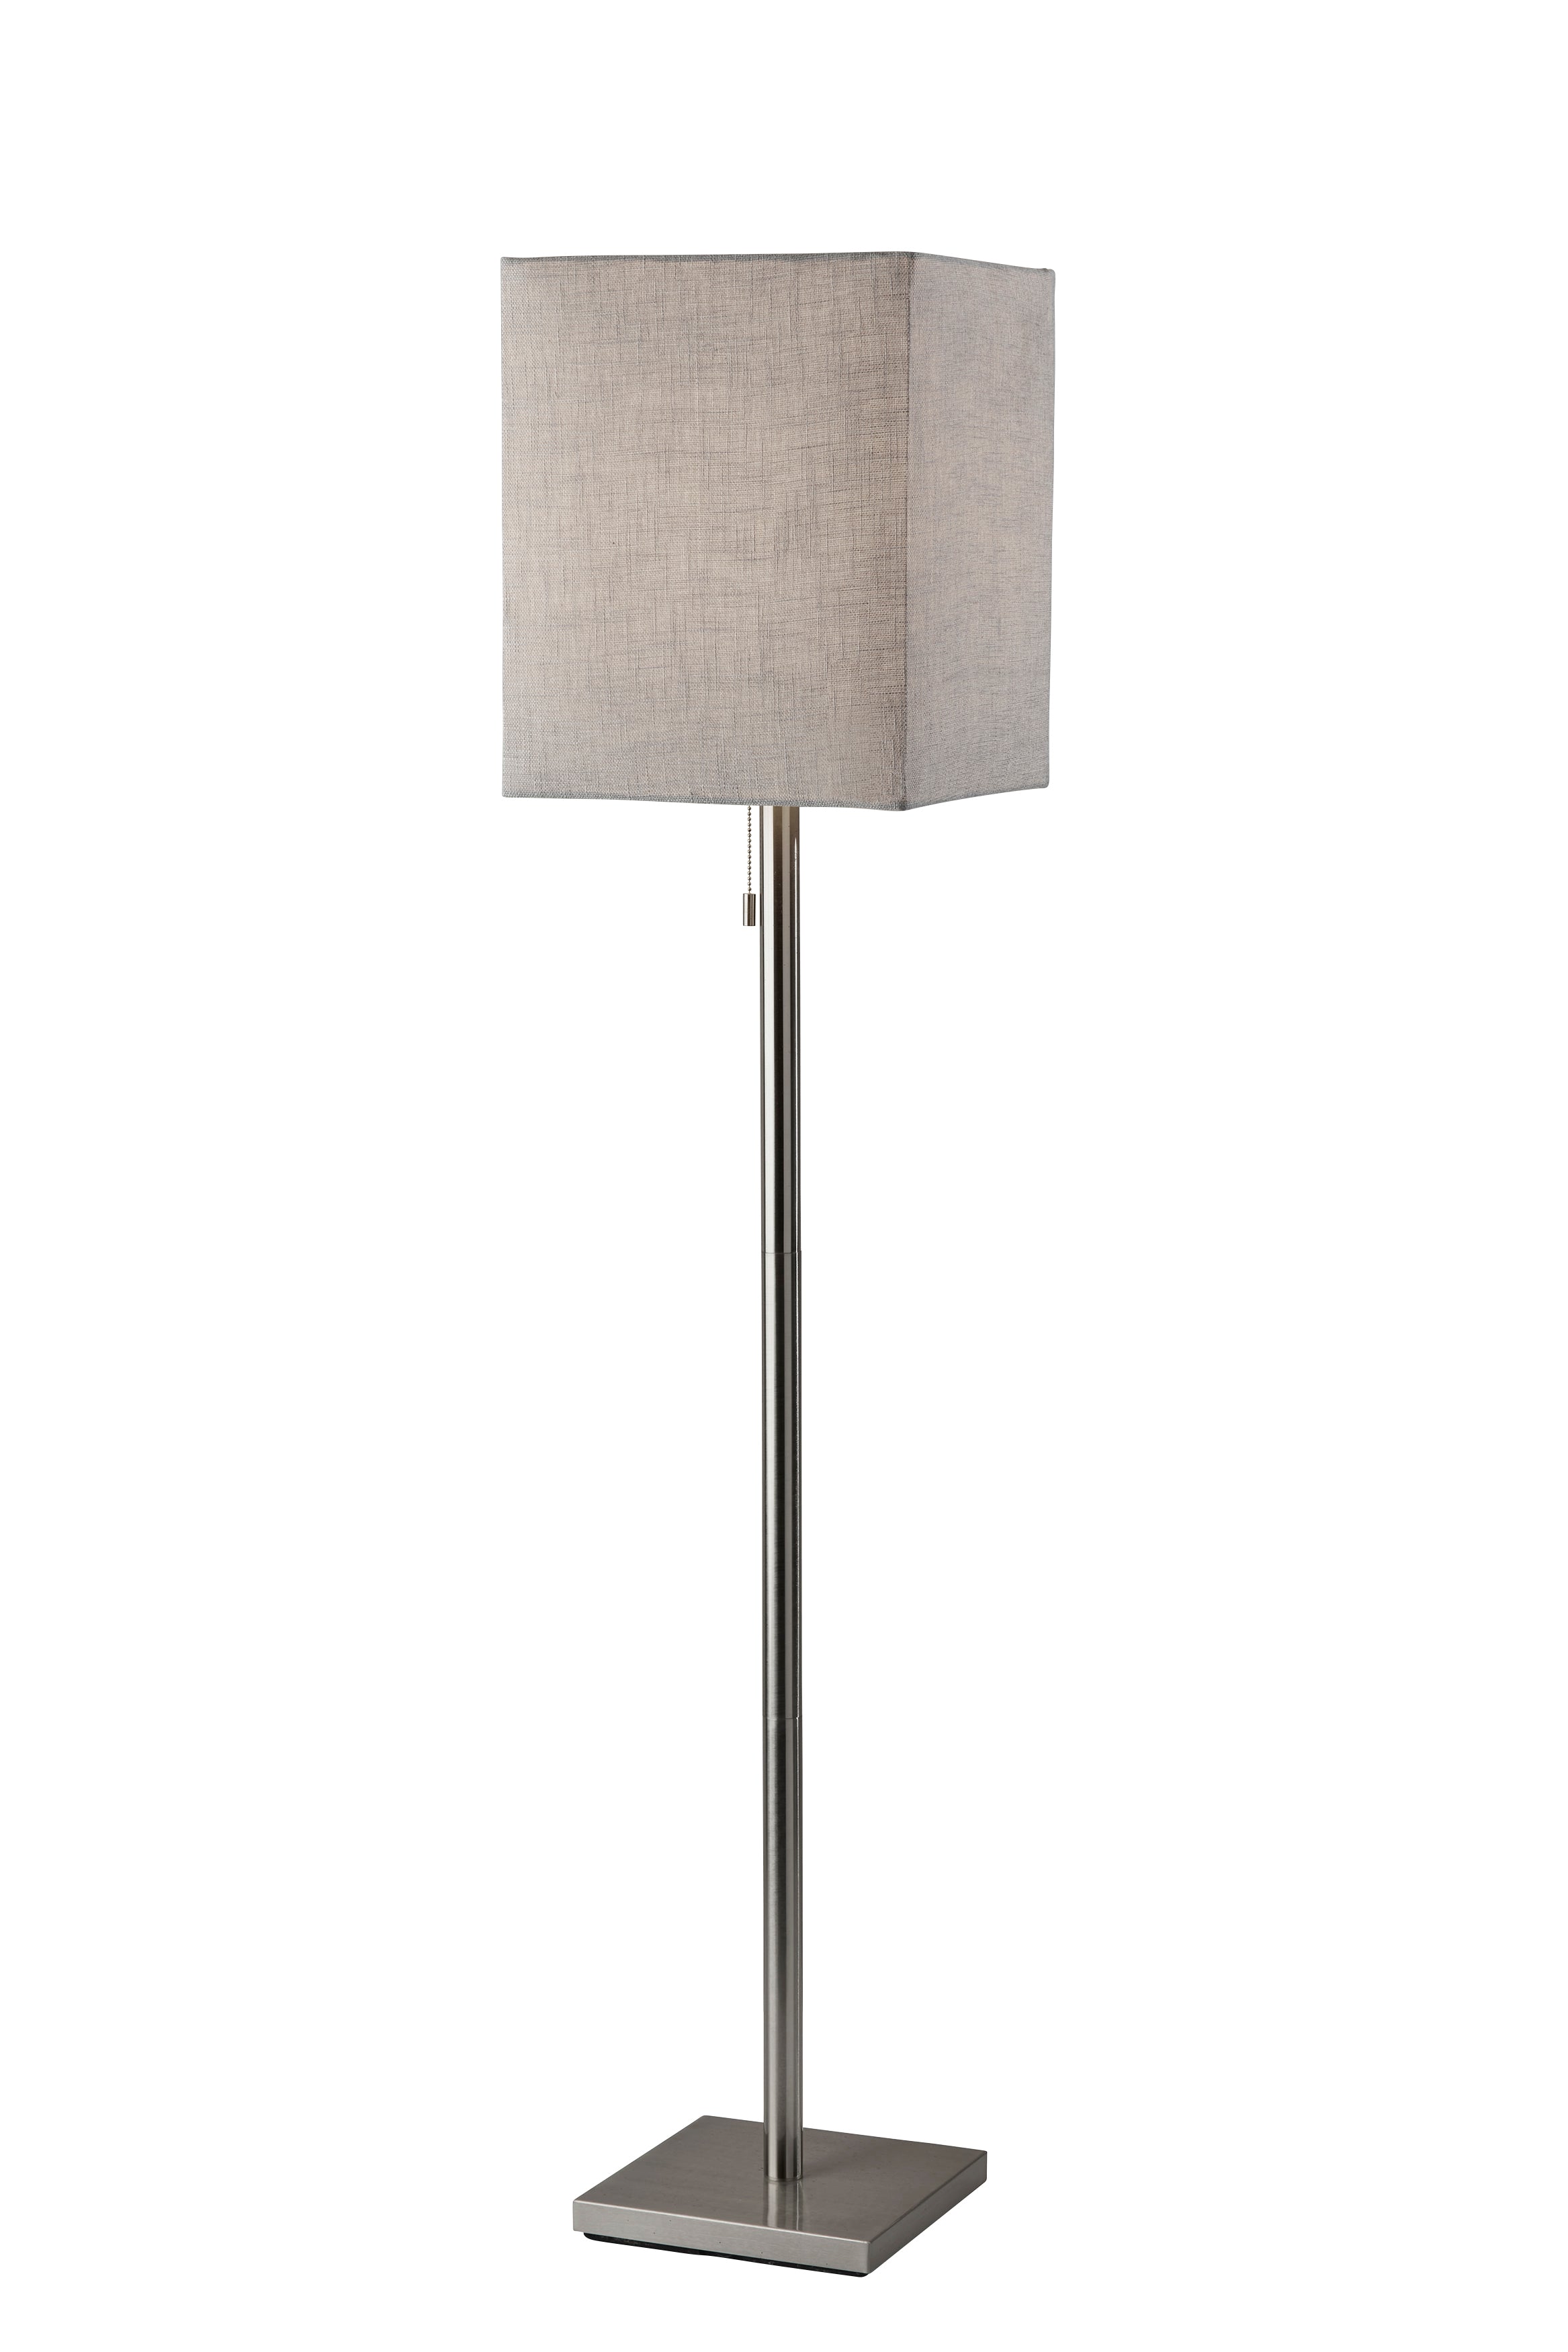 ESTELLE Floor lamp Stainless steel - 1567-22 | ADESSO